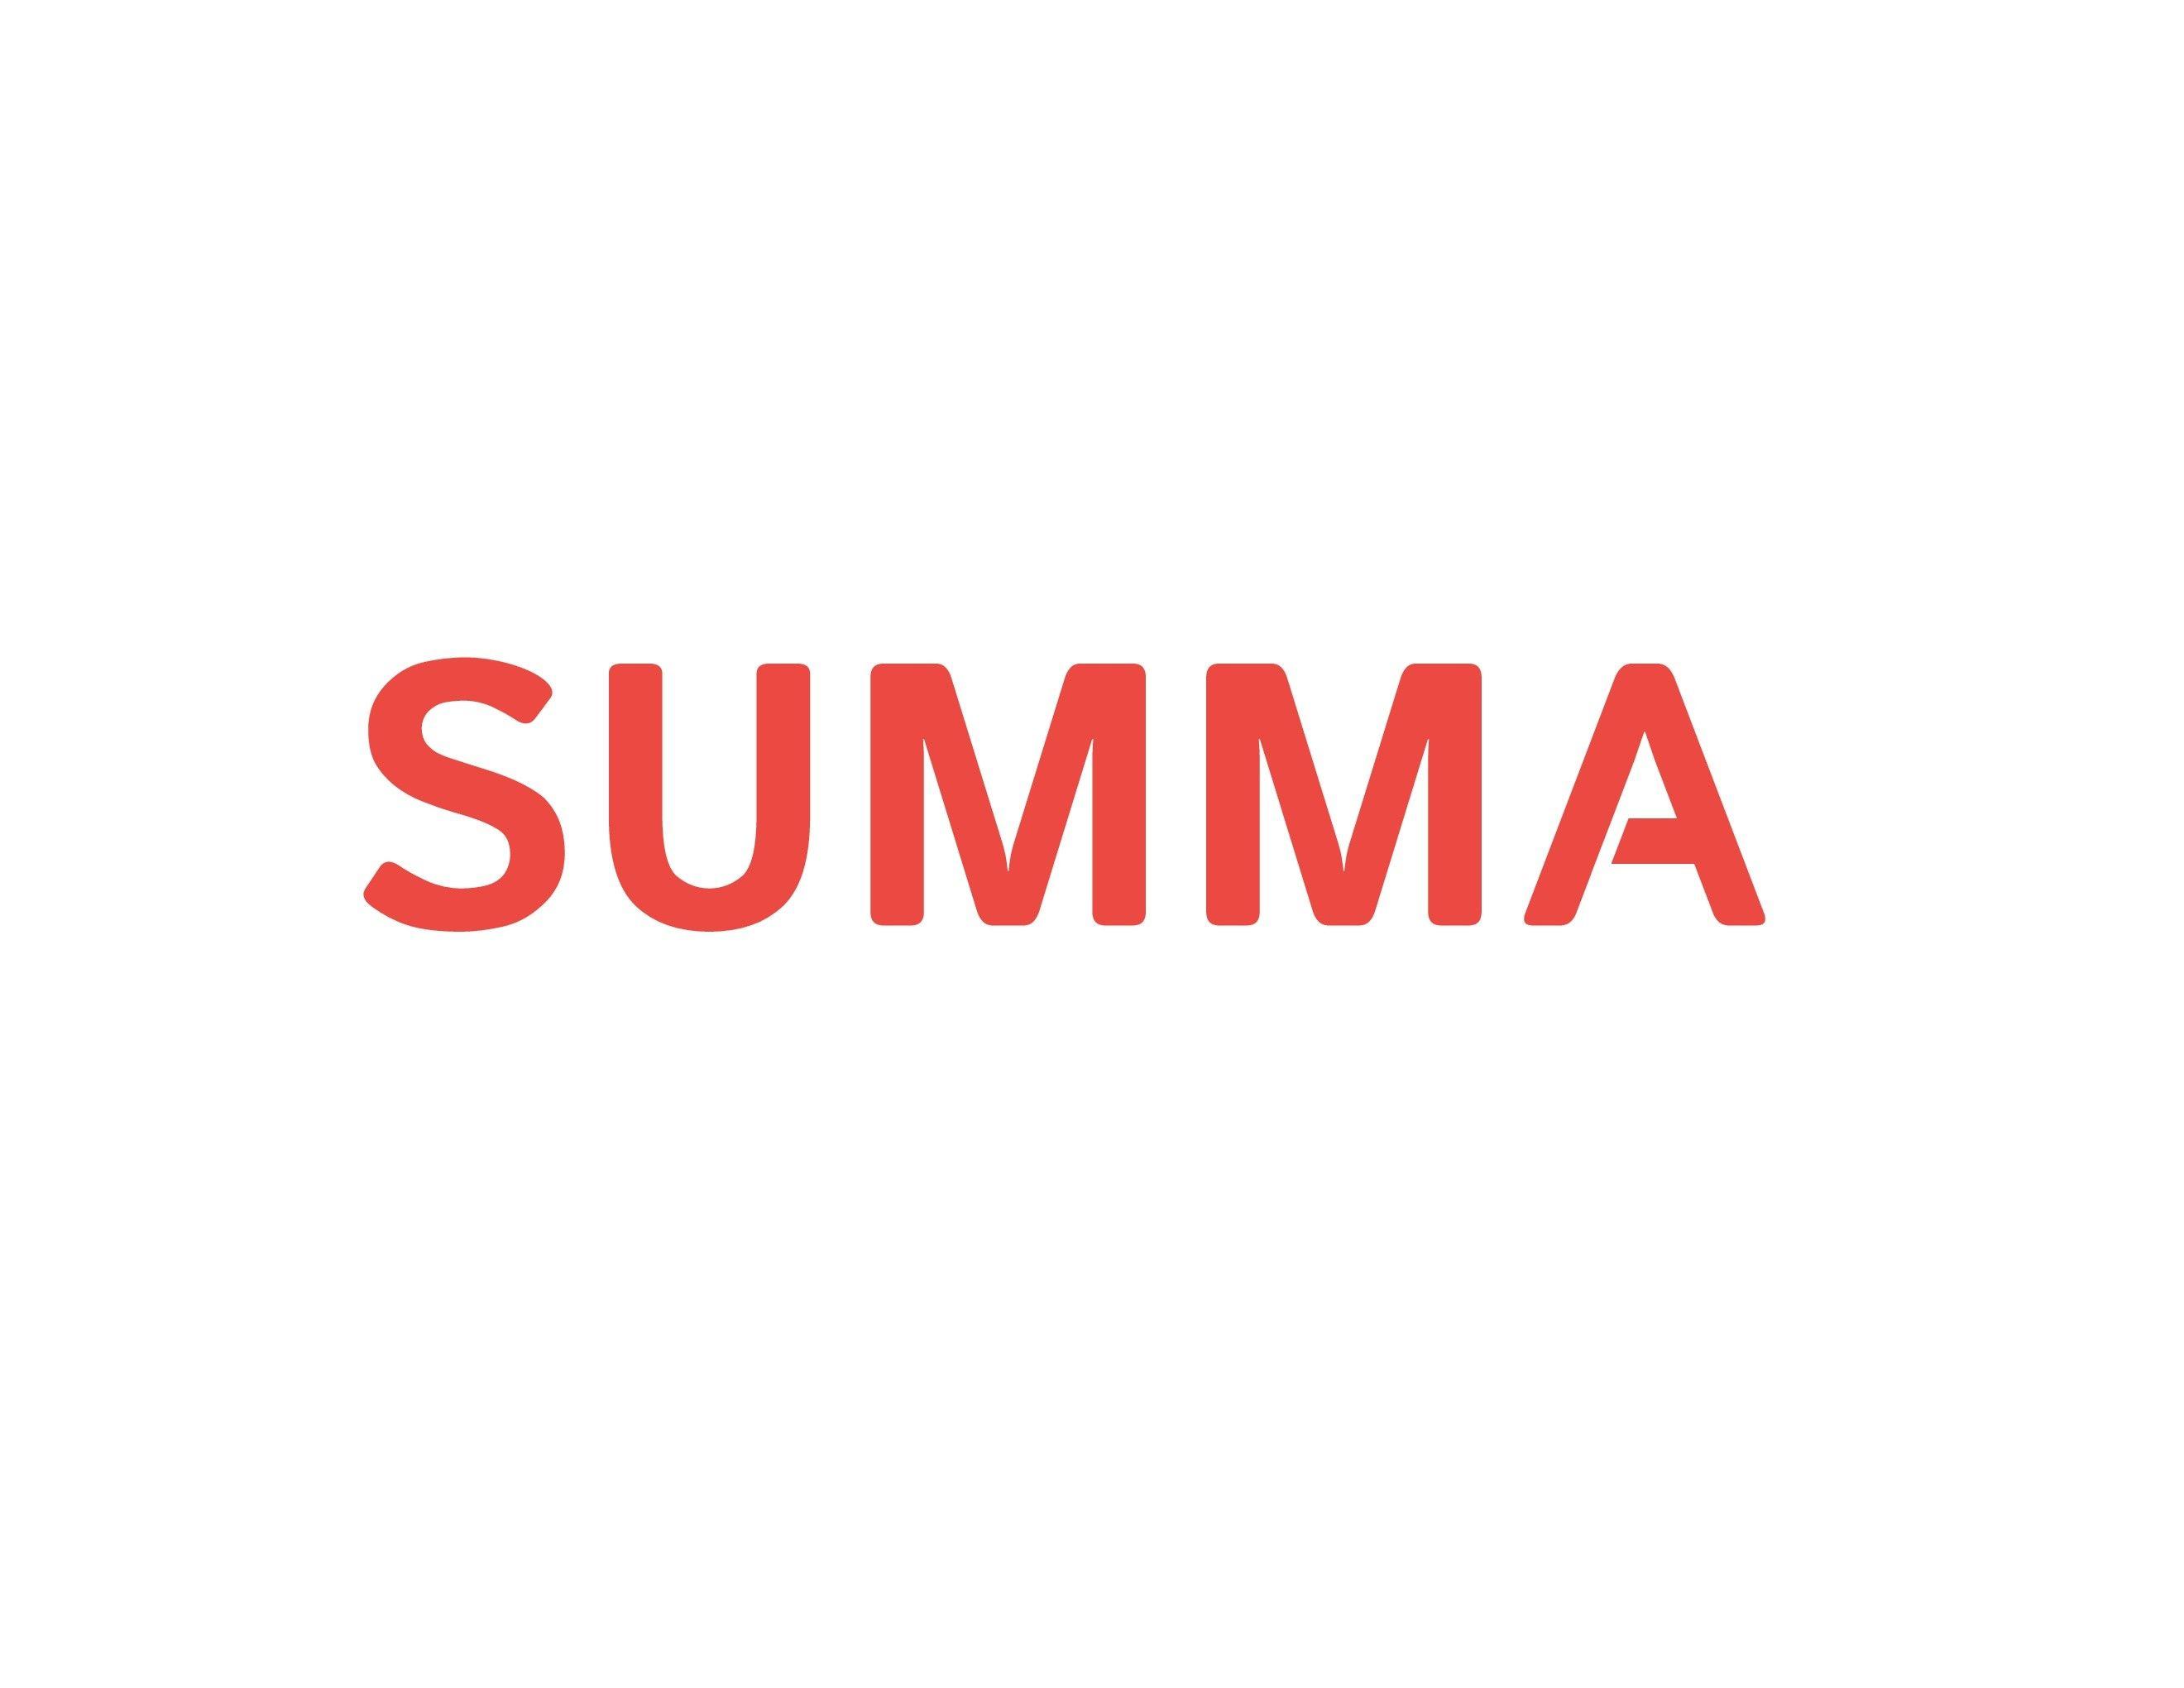 Summa Logo - Summa